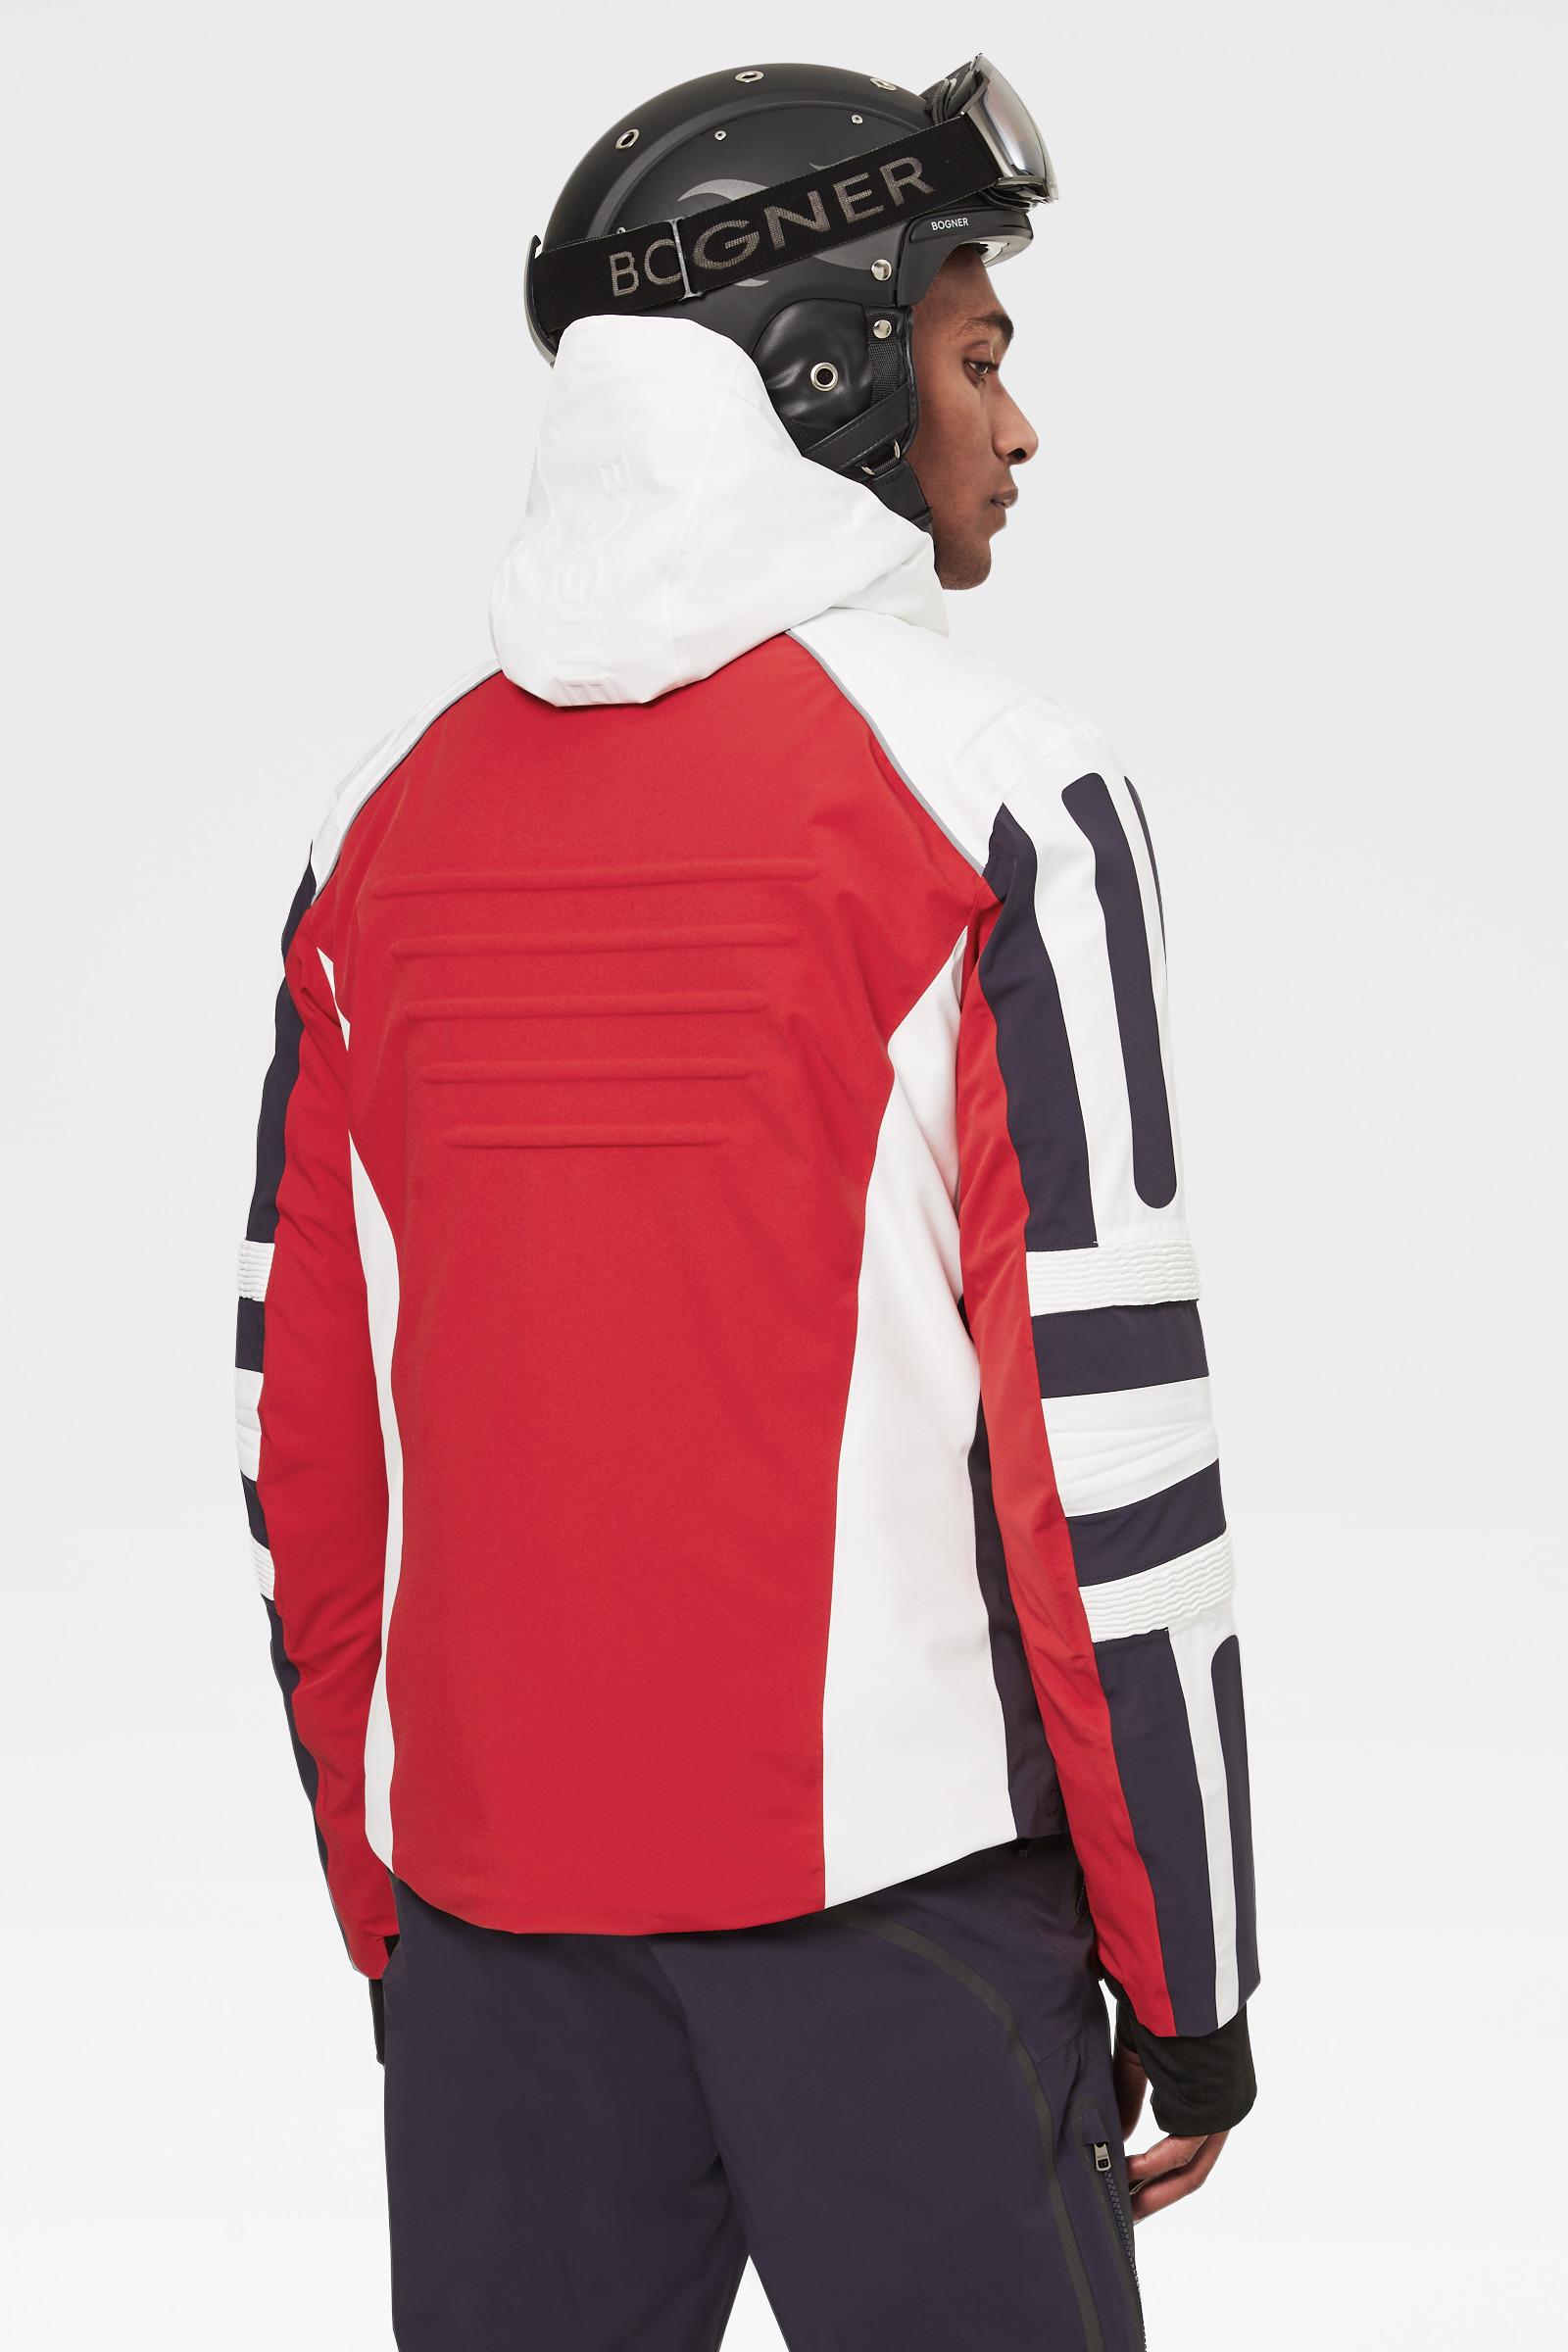 Bogner Kaleo Ski Jacket In Red/white/black for Men | Lyst Canada